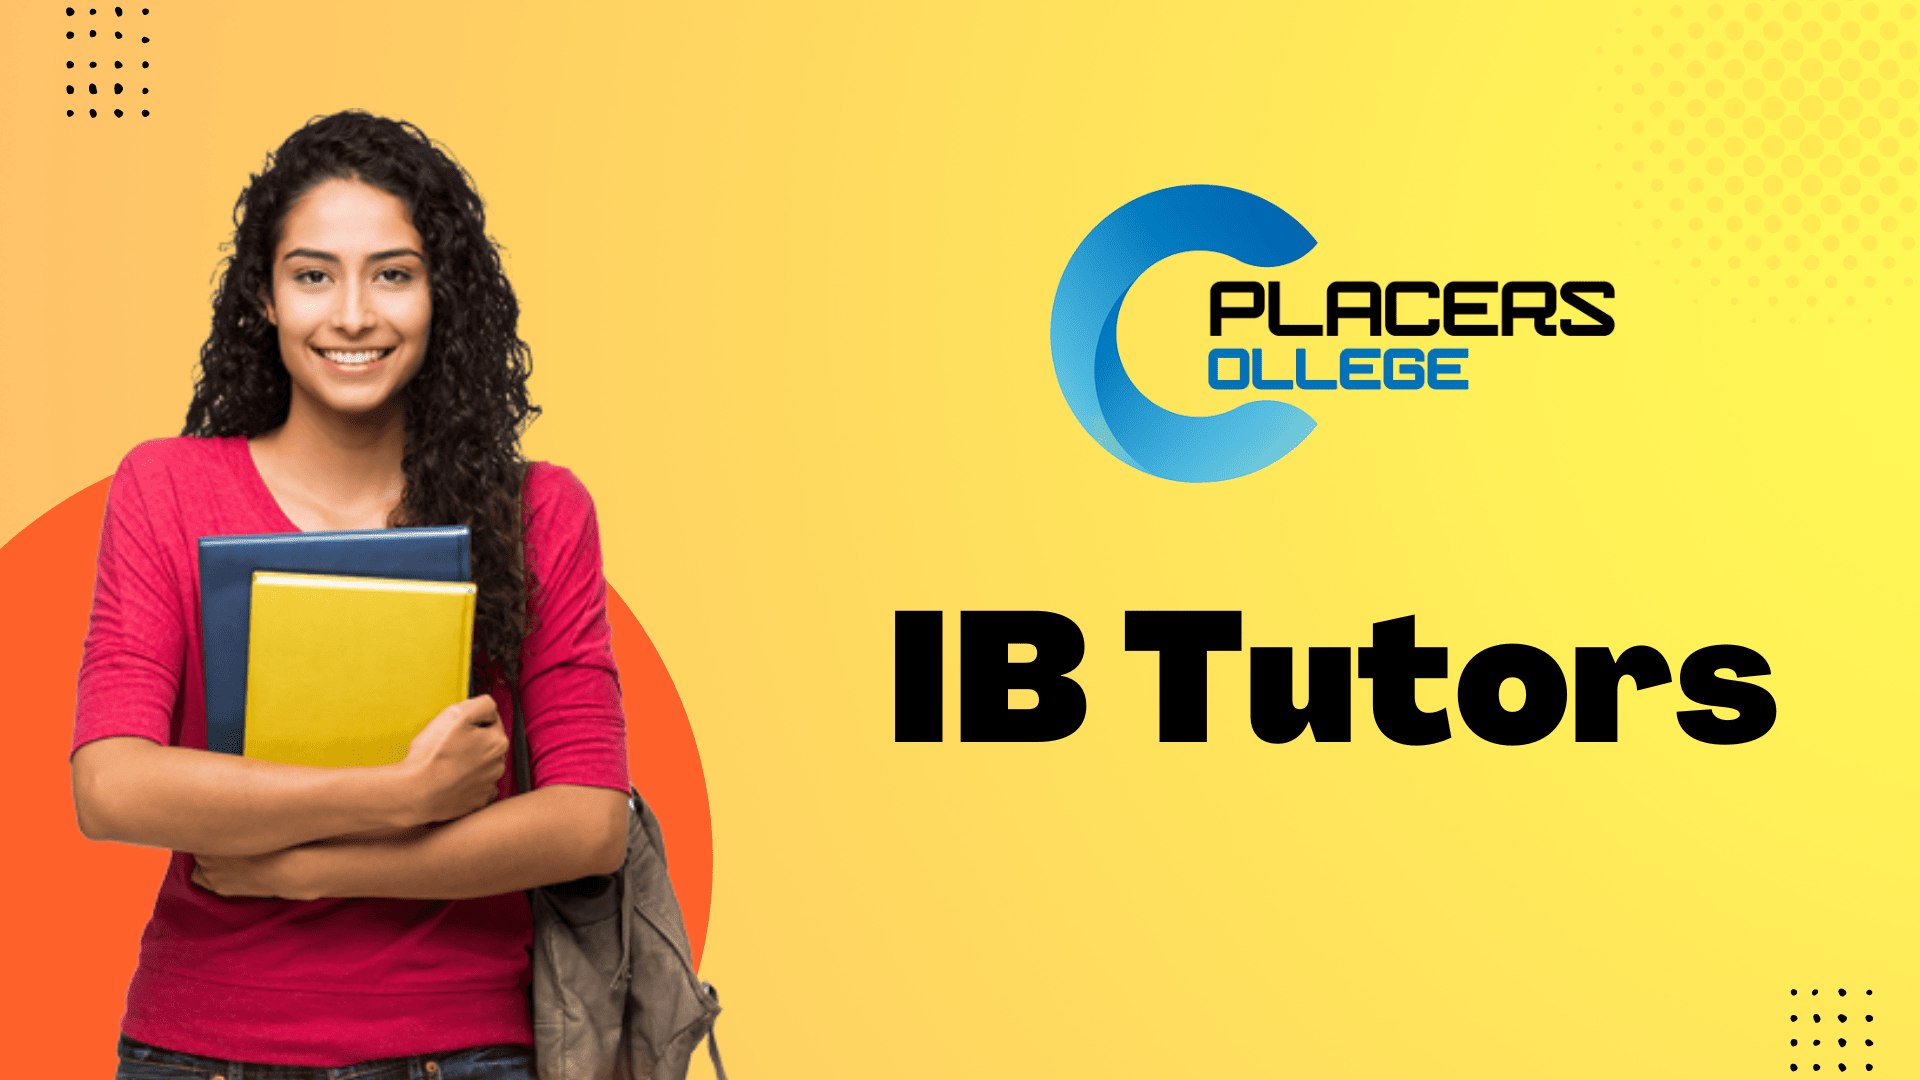 IB Tutor | IB Online Tutoring | College Placers